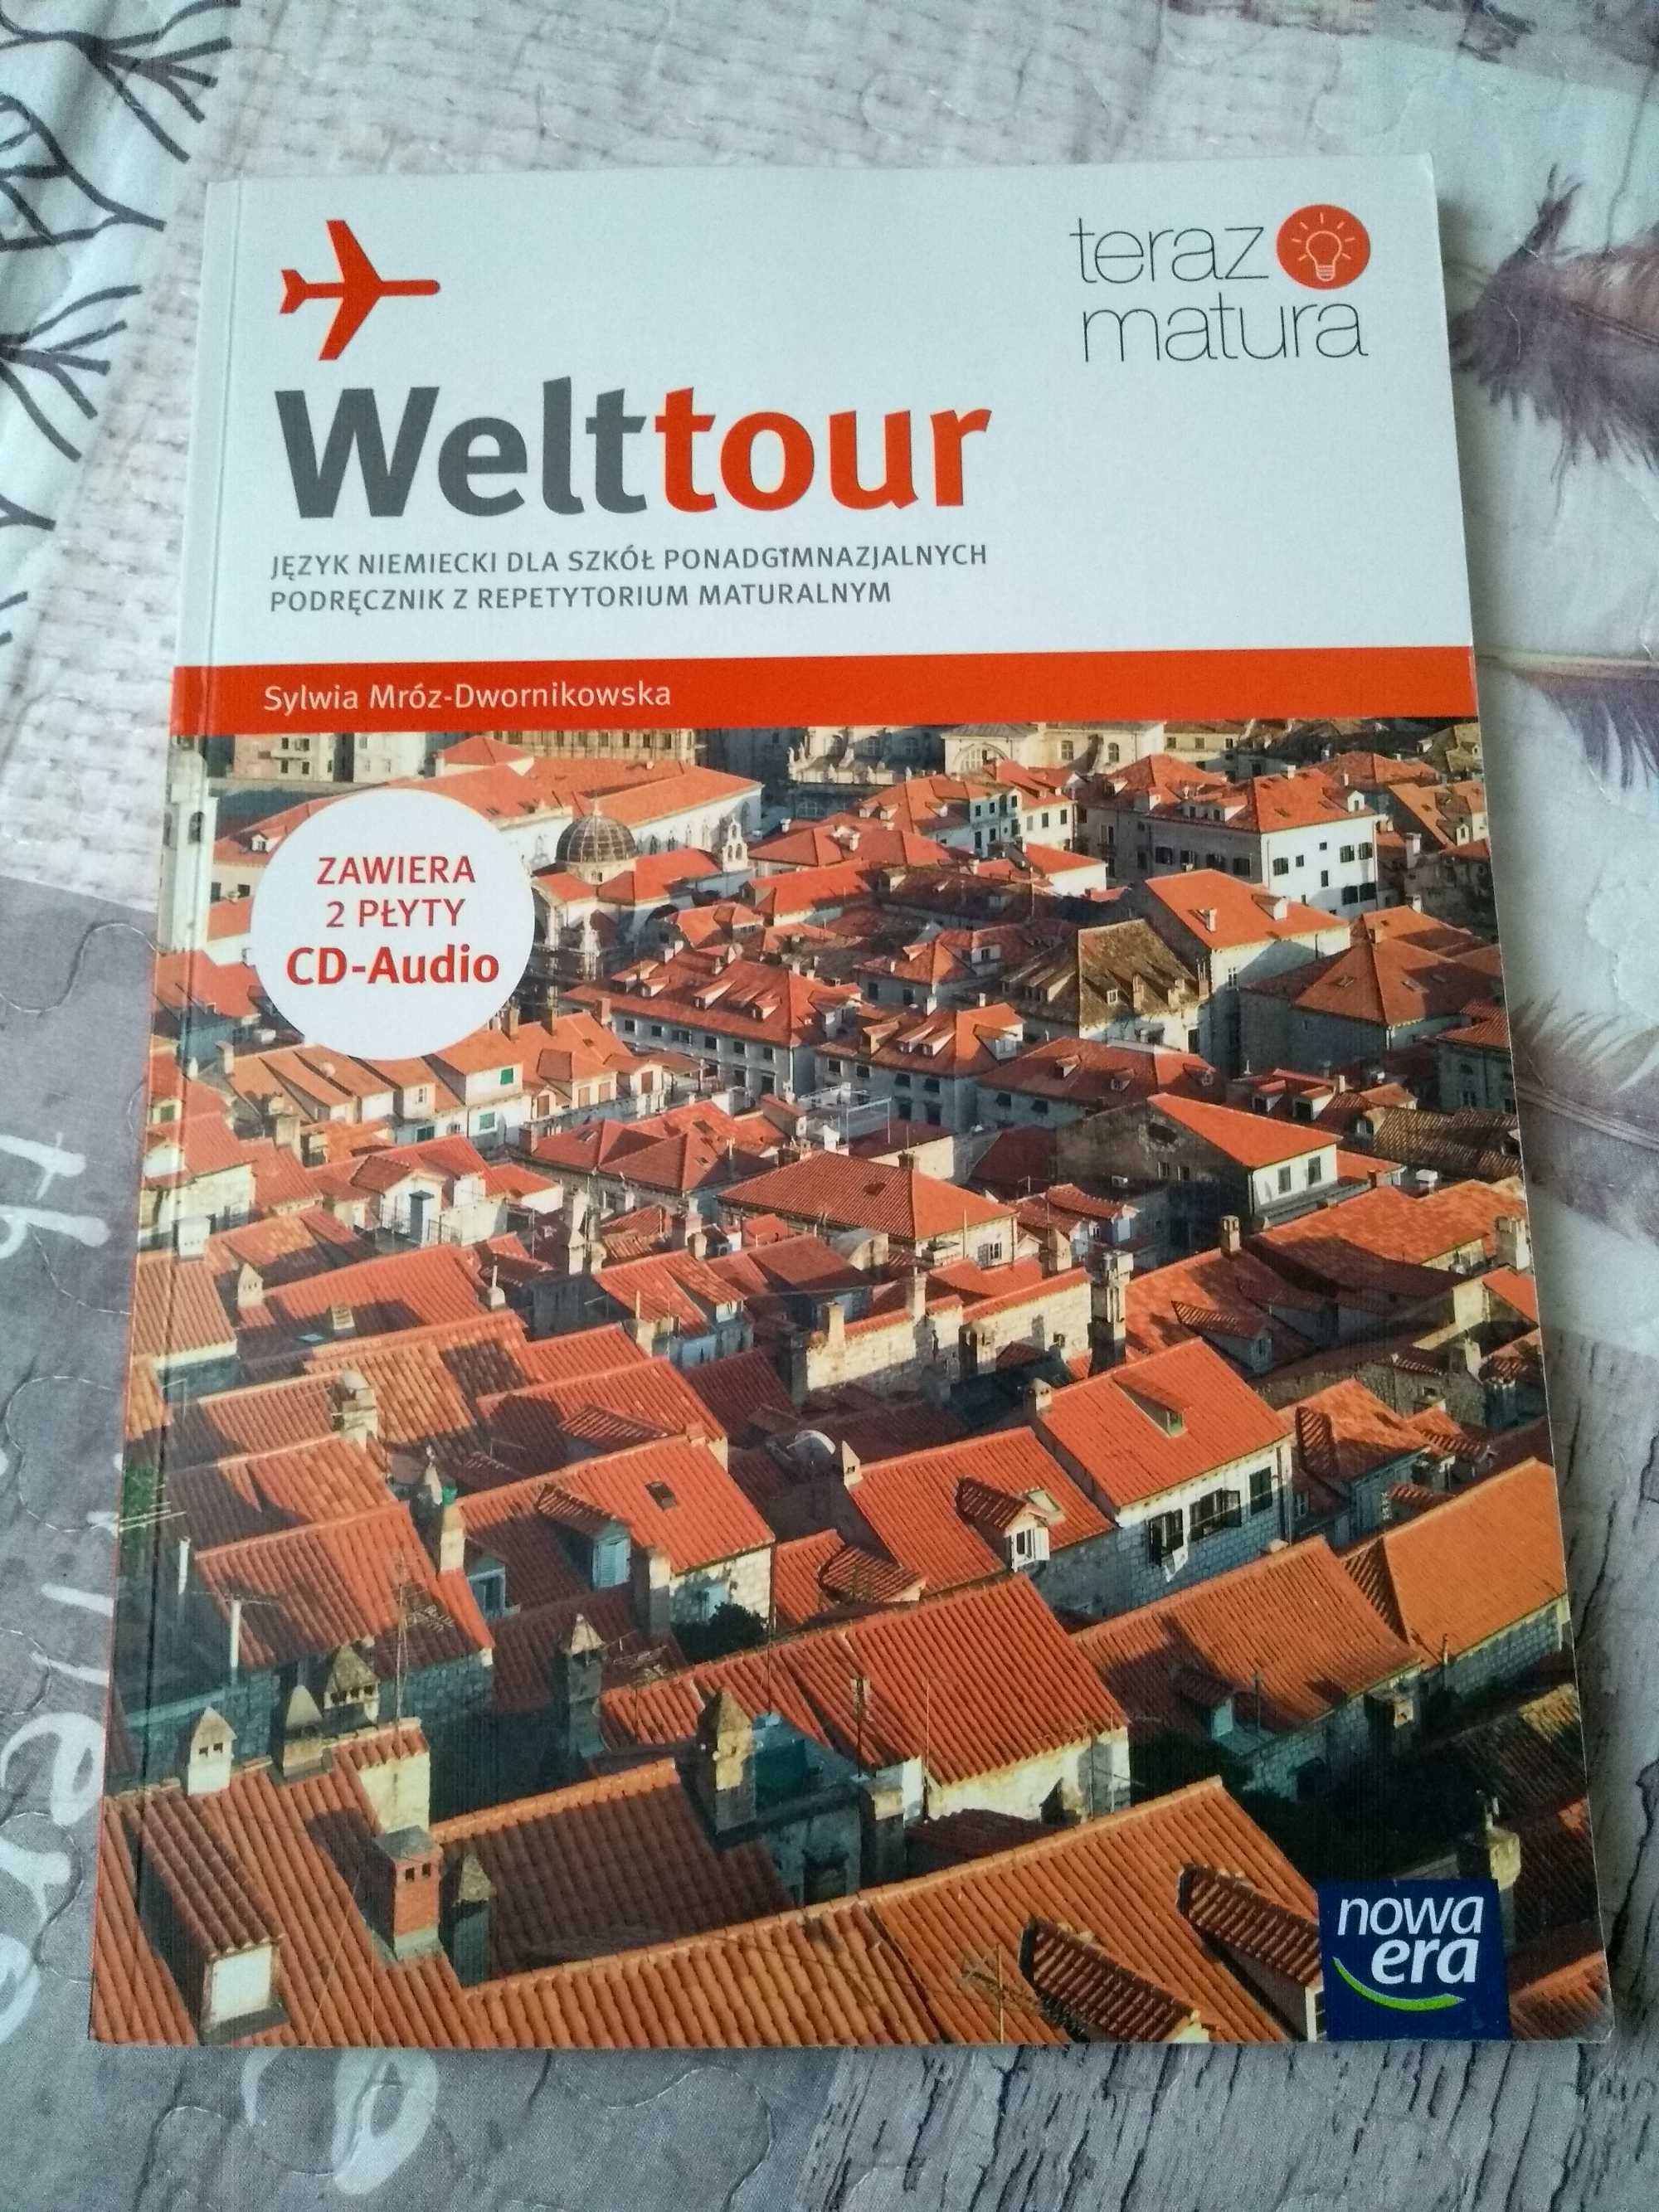 Welttour Teraz matura Niemiecki Podręcznik z repetytorium maturalnym